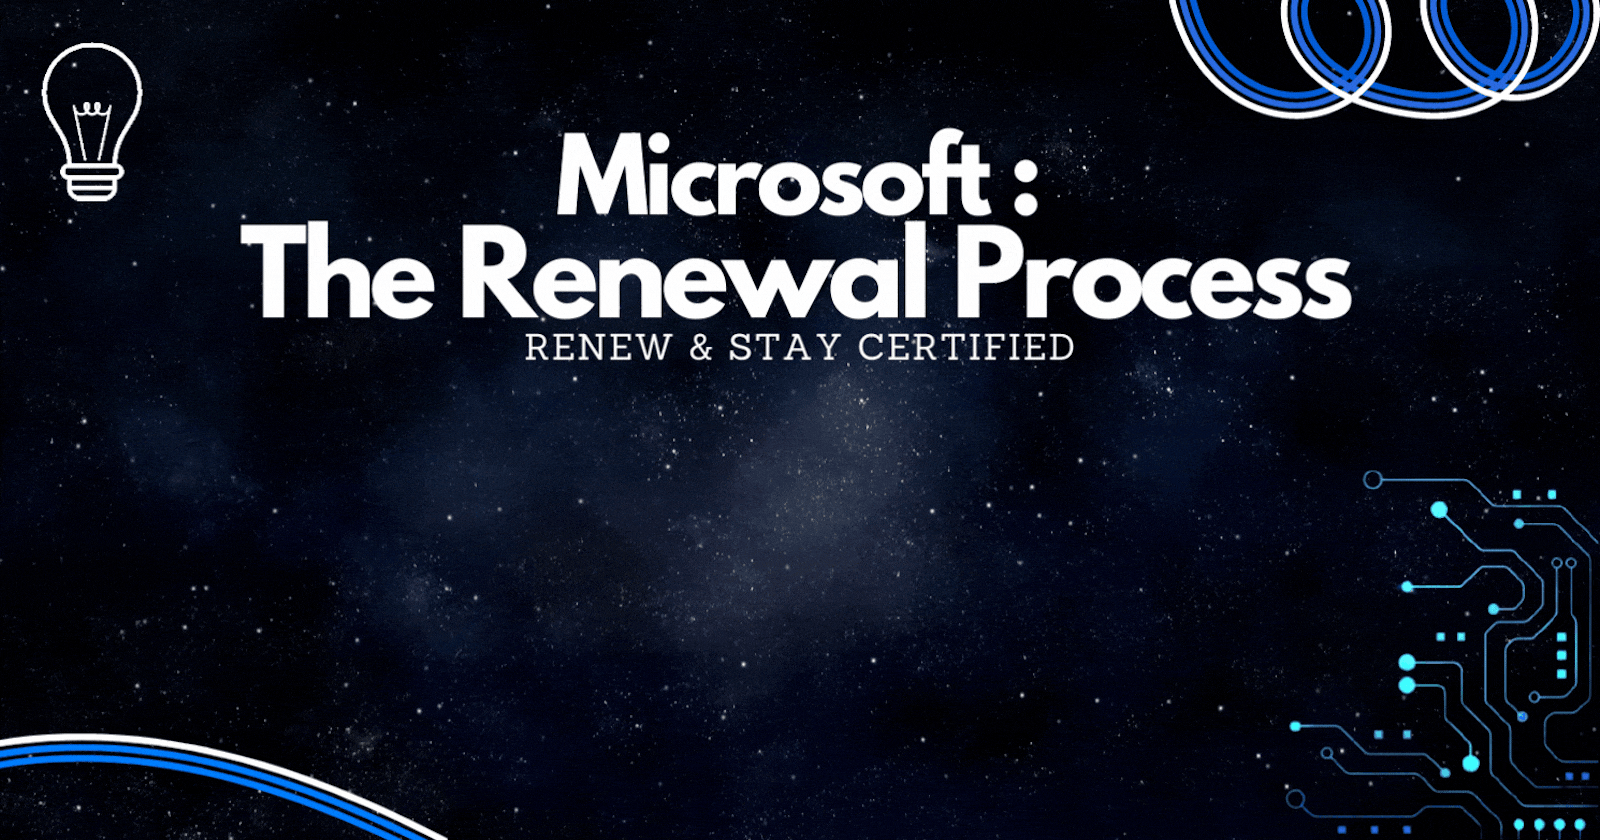 Microsoft Certified: The Renewal Process